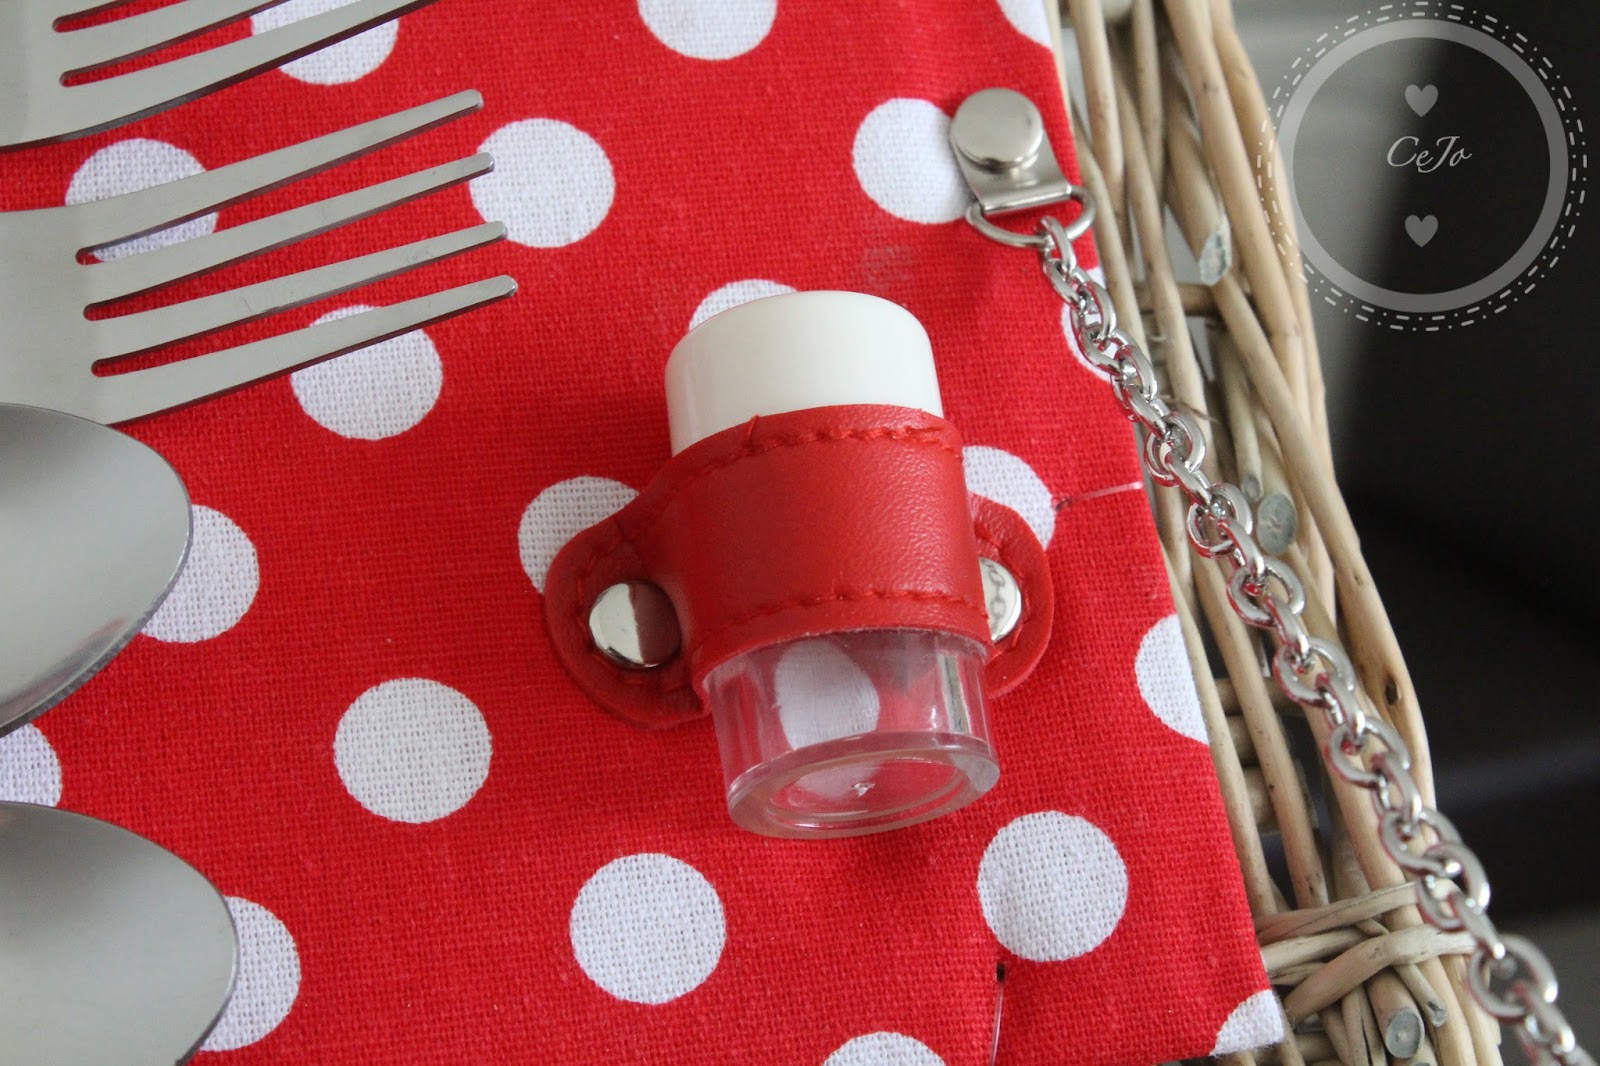 picnic basket with salt and pepper pots